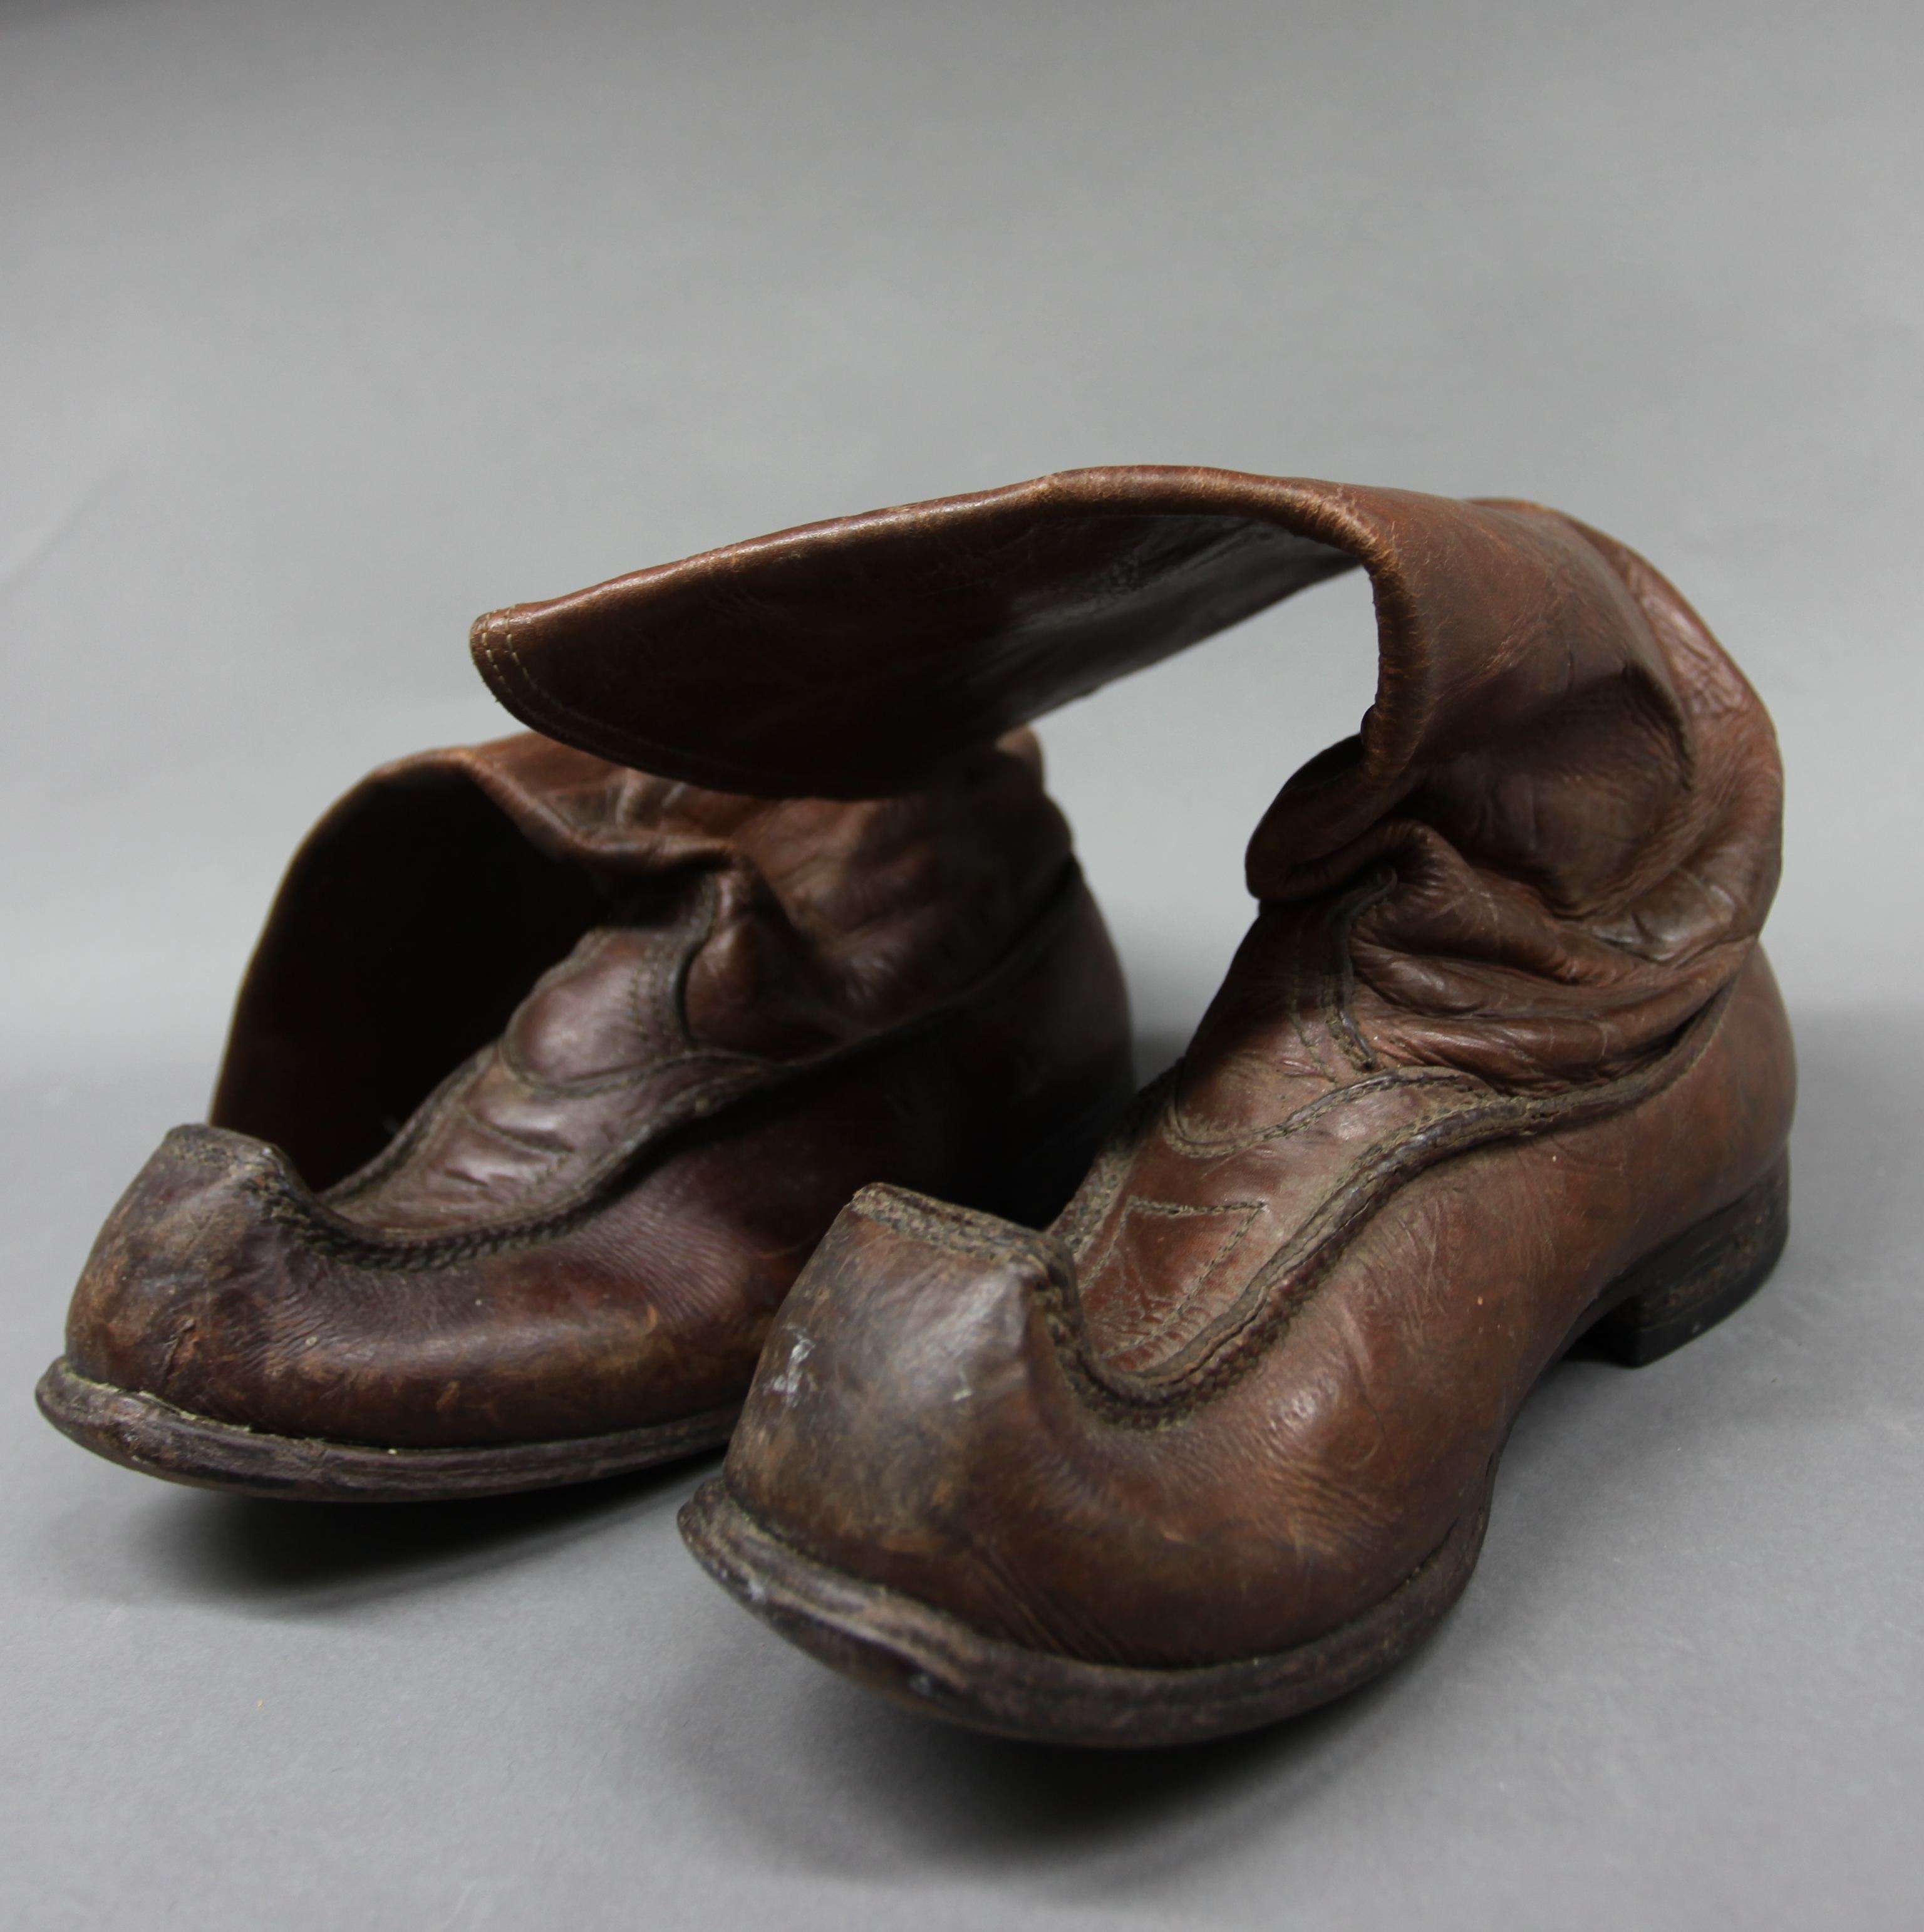 Saami boots, from the Scott Polar Museum, Cambridge